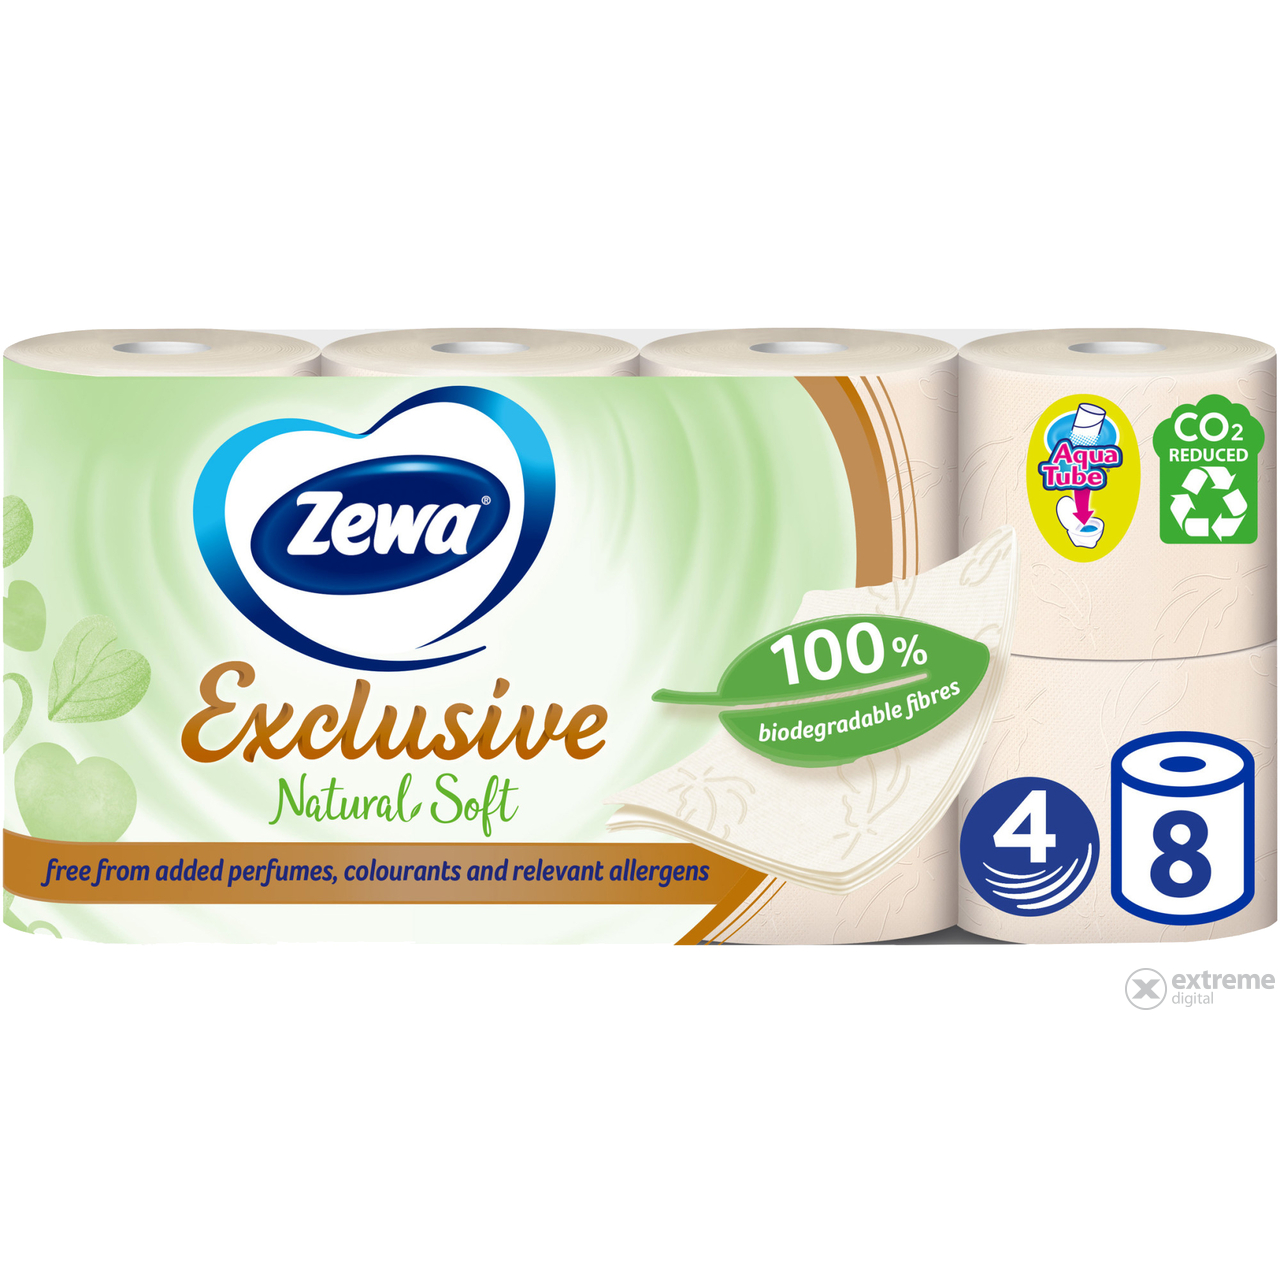 Zewa Exclusive Natural Soft toalet papir 4 slojni, 8 rolne